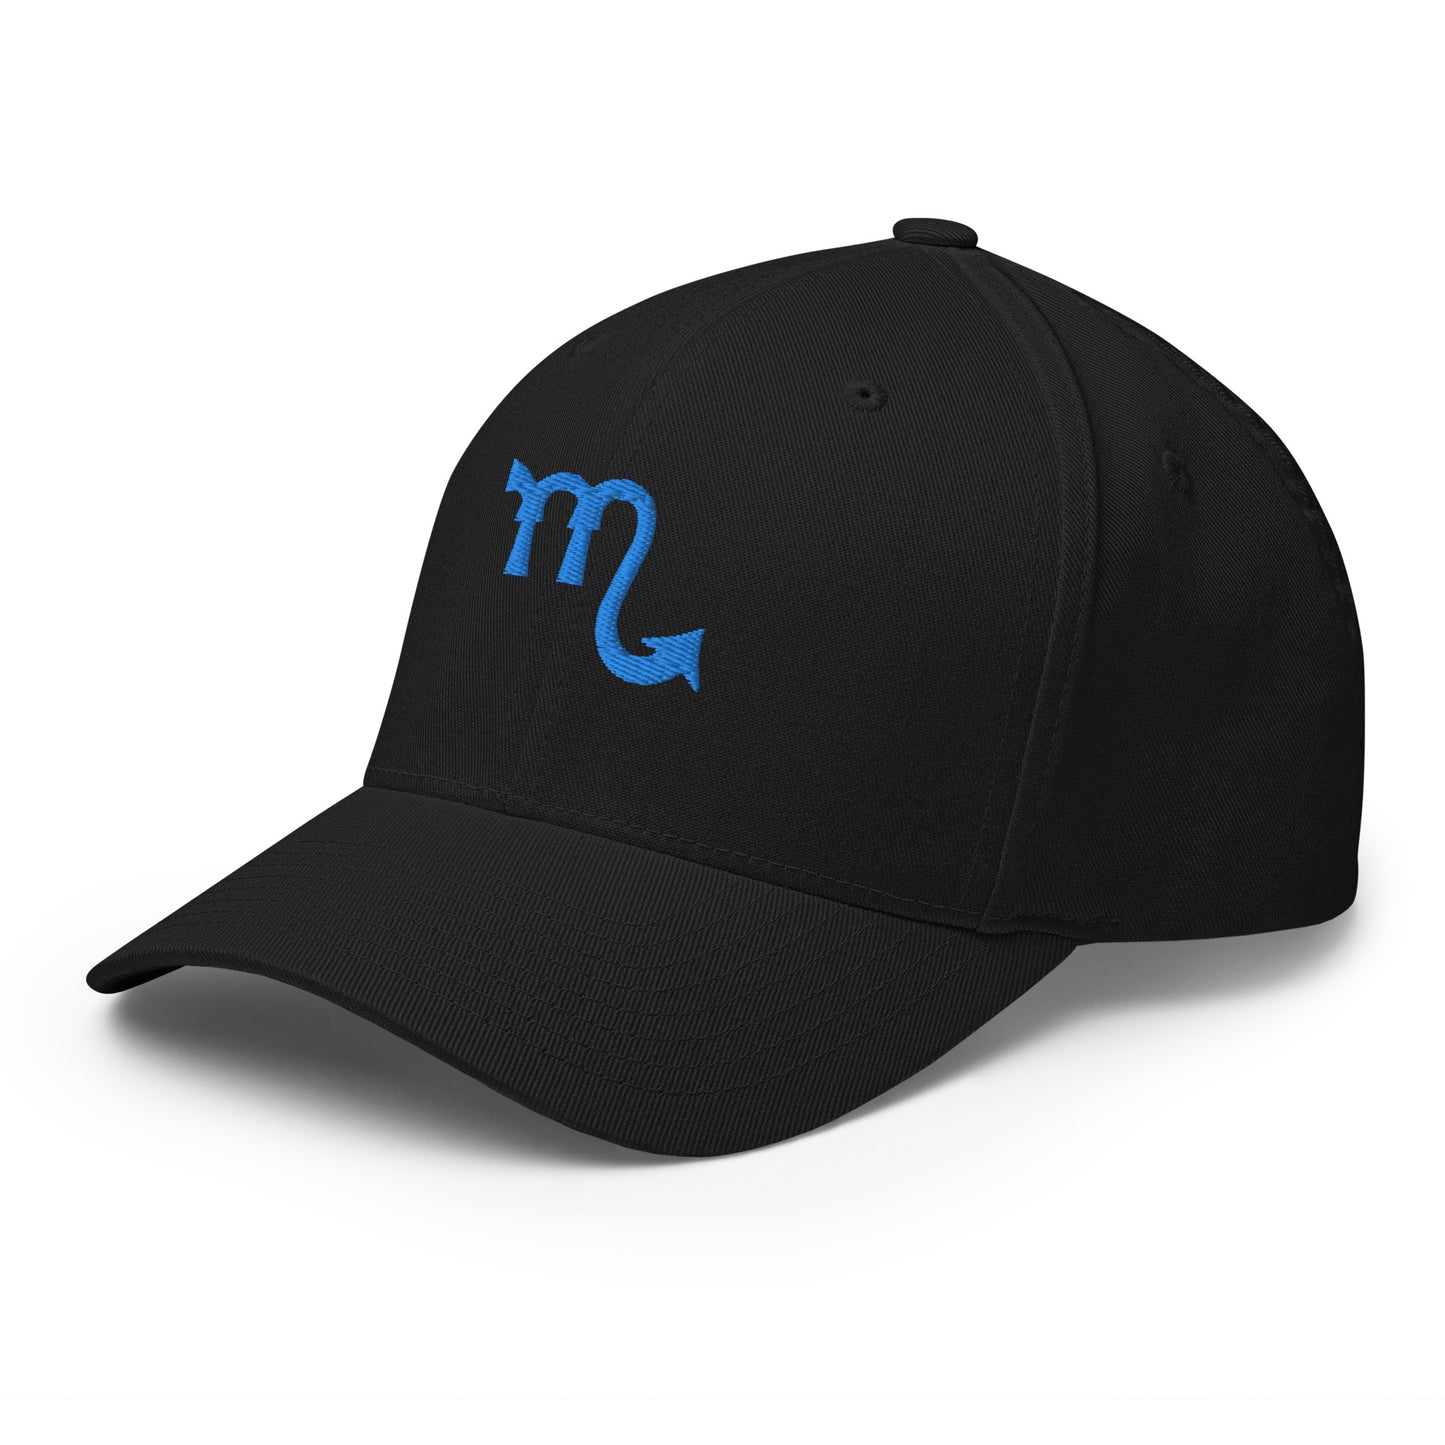 Baseball Cap with Scorpio Symbol